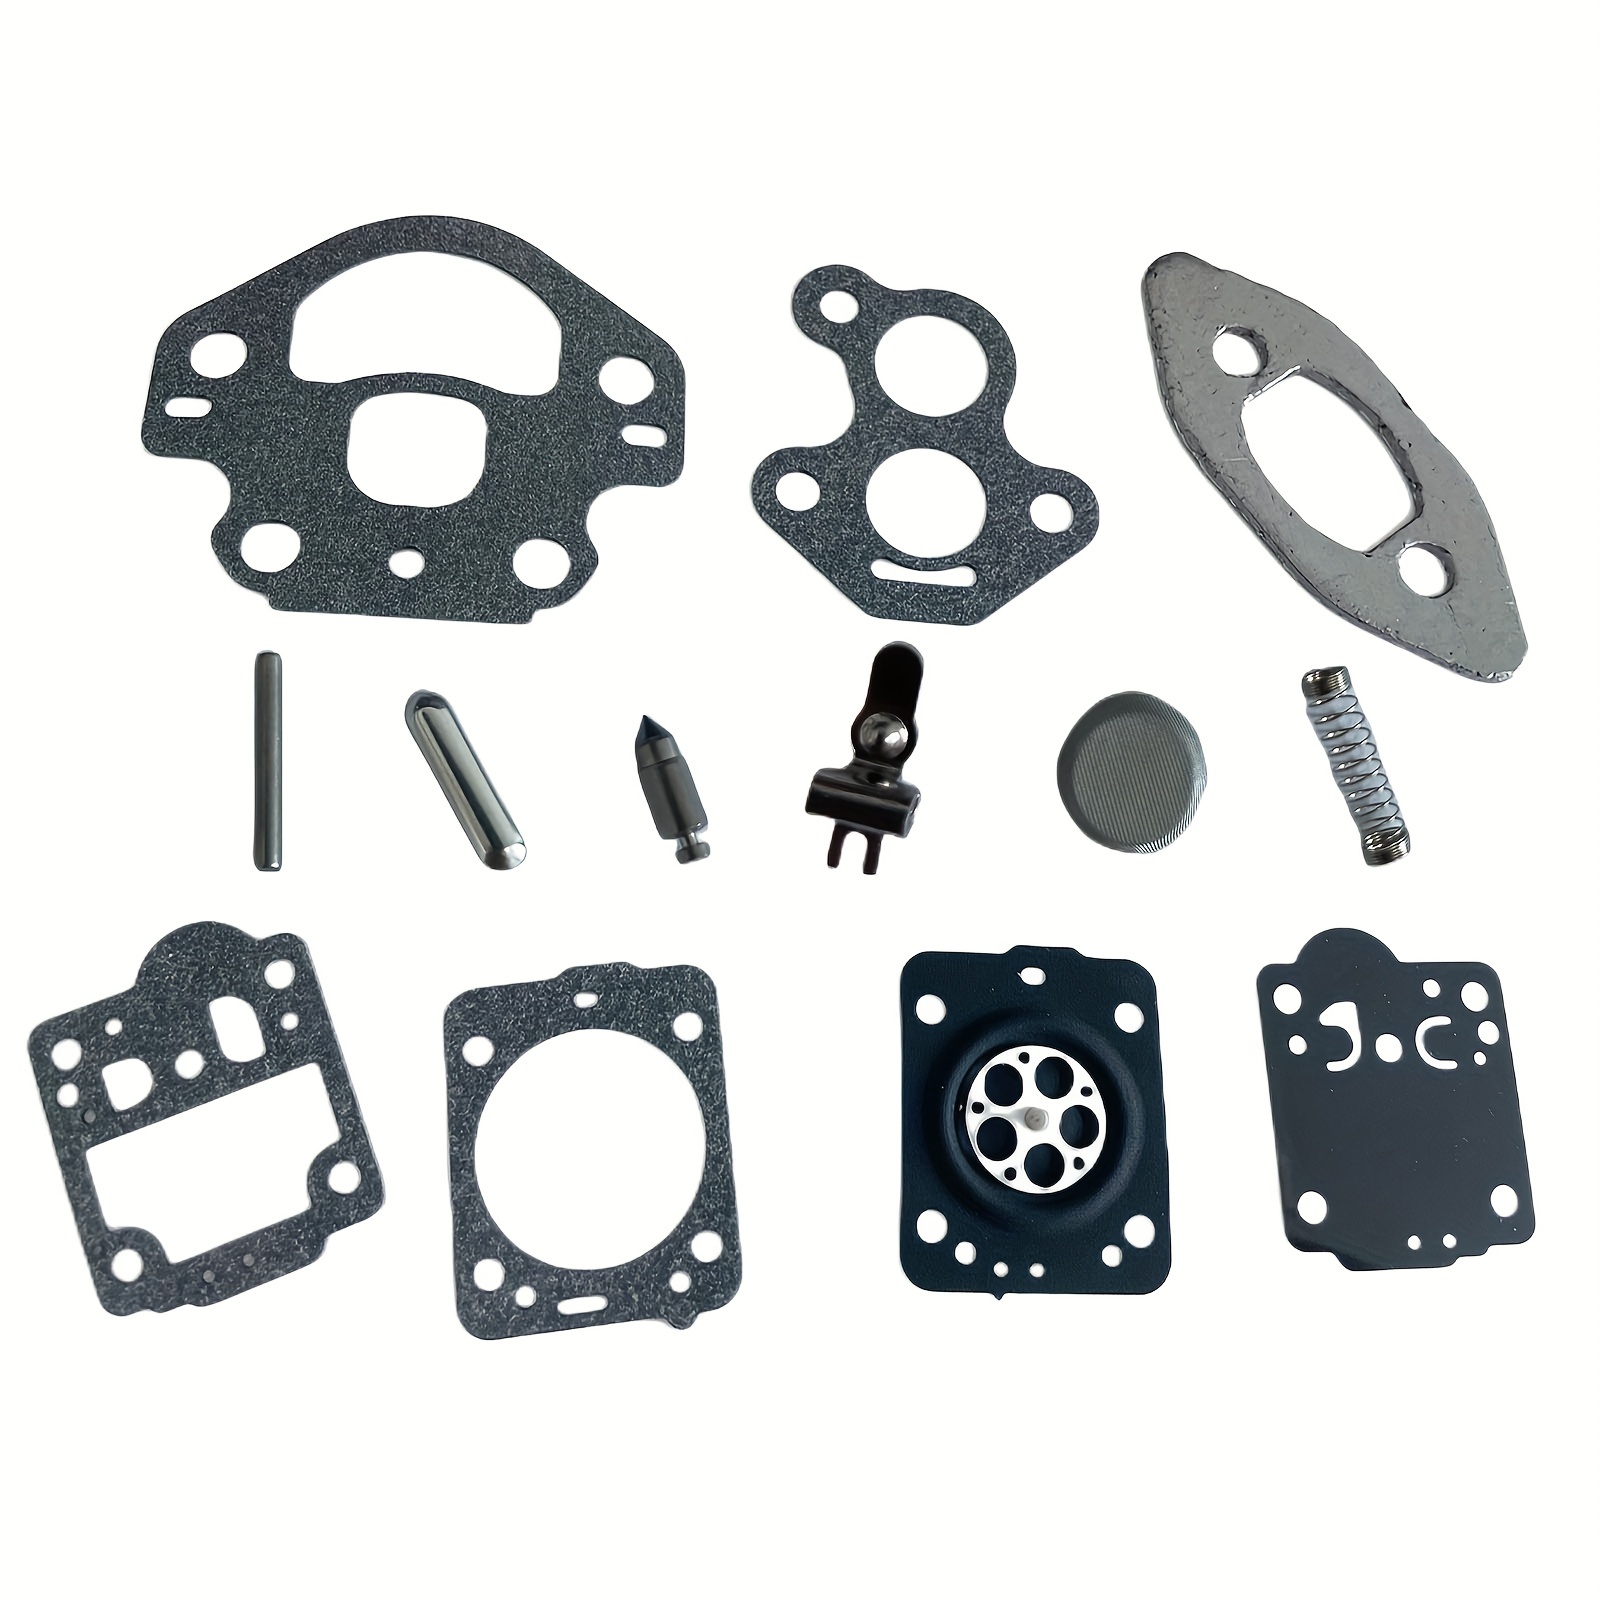 Adefol Chainsaw Carburetor Muffler Gasket Repair Kit for Husqvarna 235 240  Replacement OEM Parts for Zama RB149, RB 149, RB-149